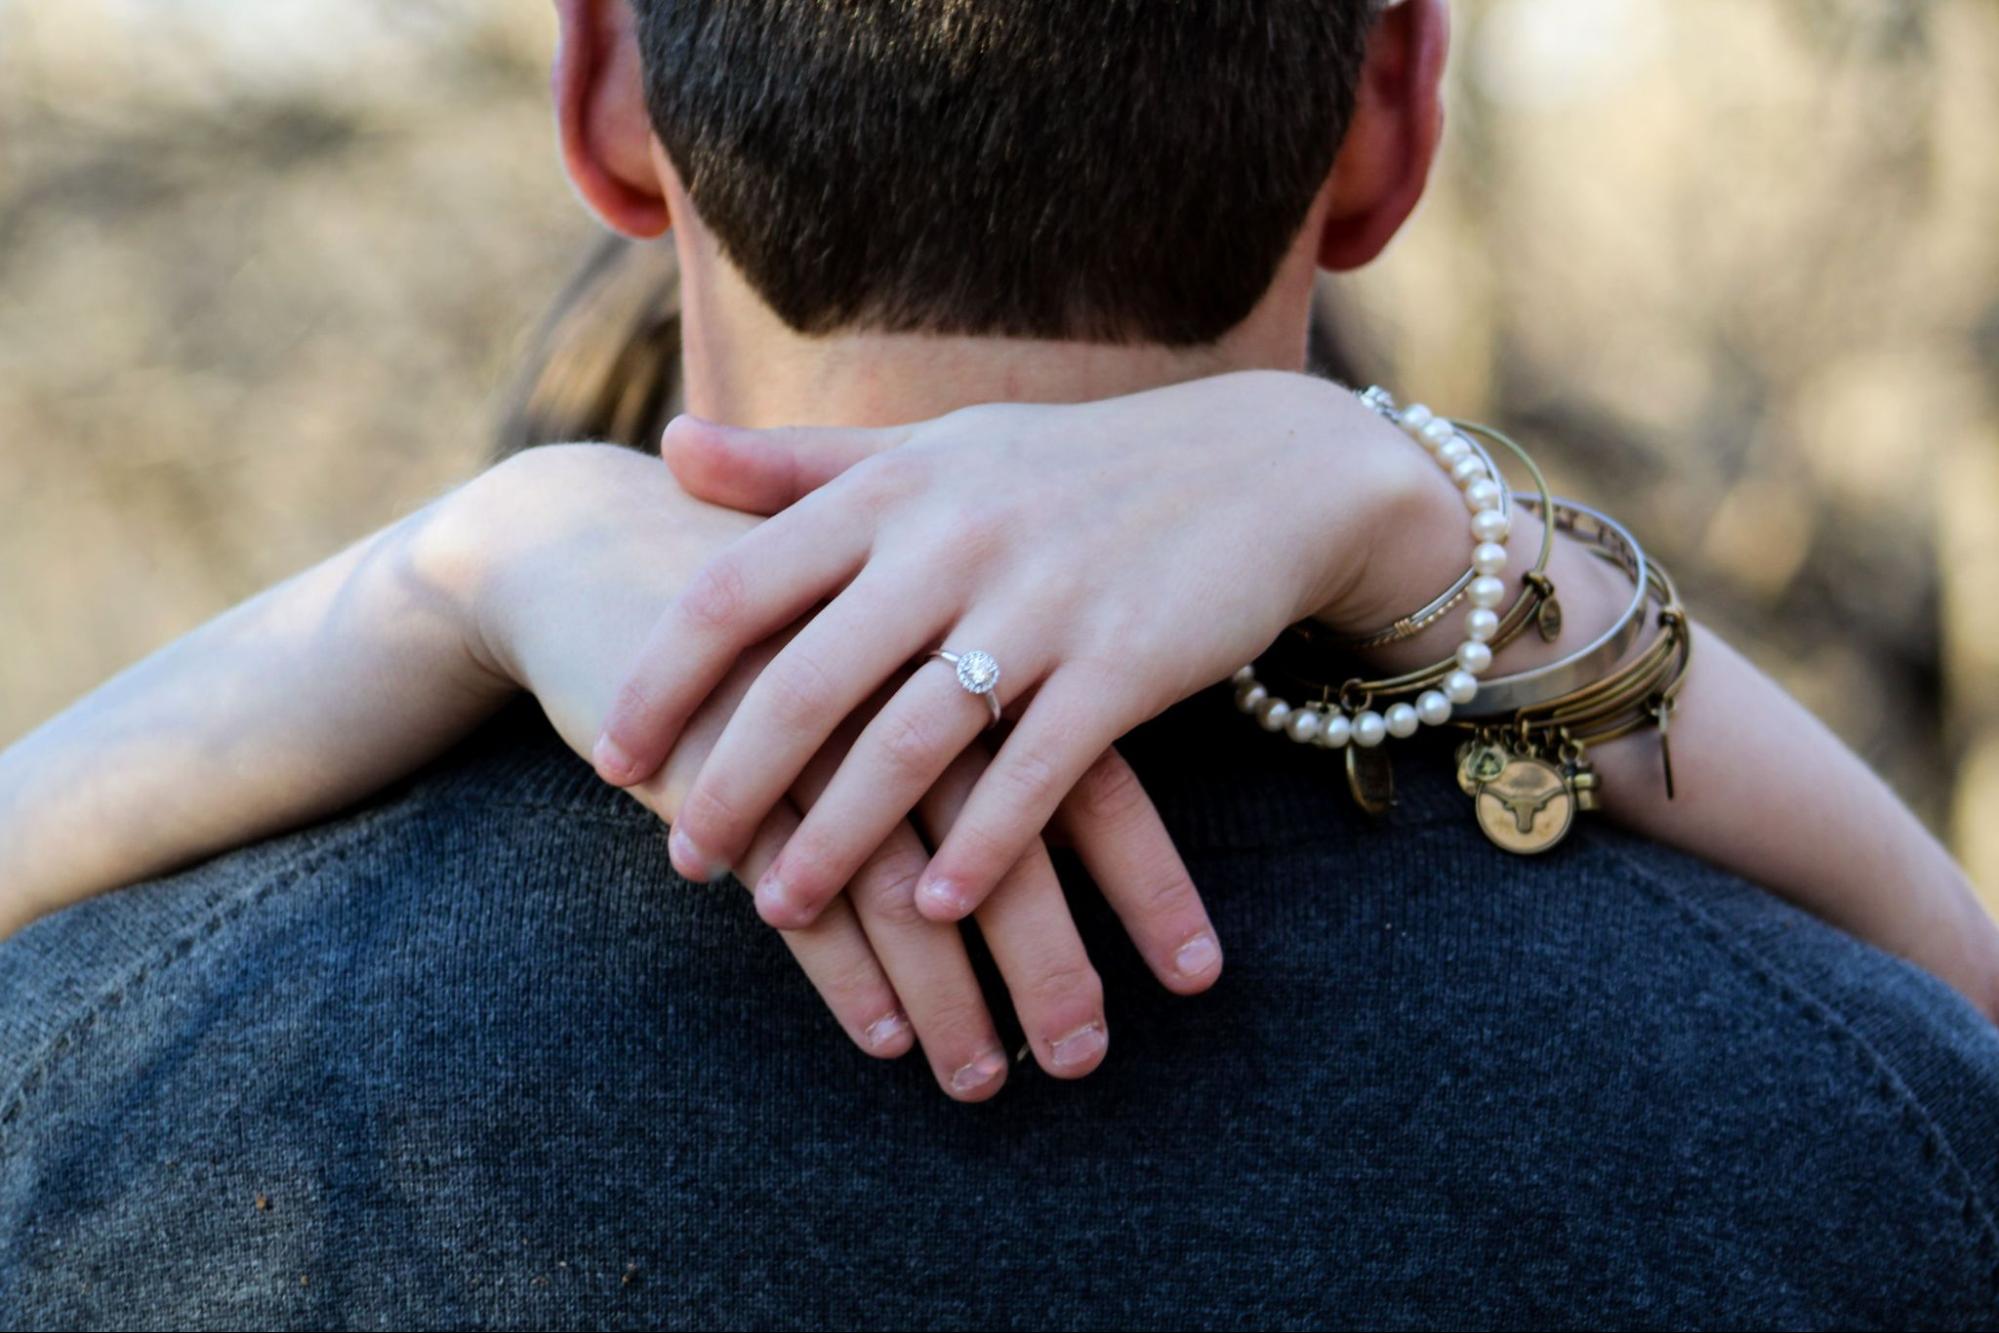 A woman hugs her fiance while wearing multiple bracelets.